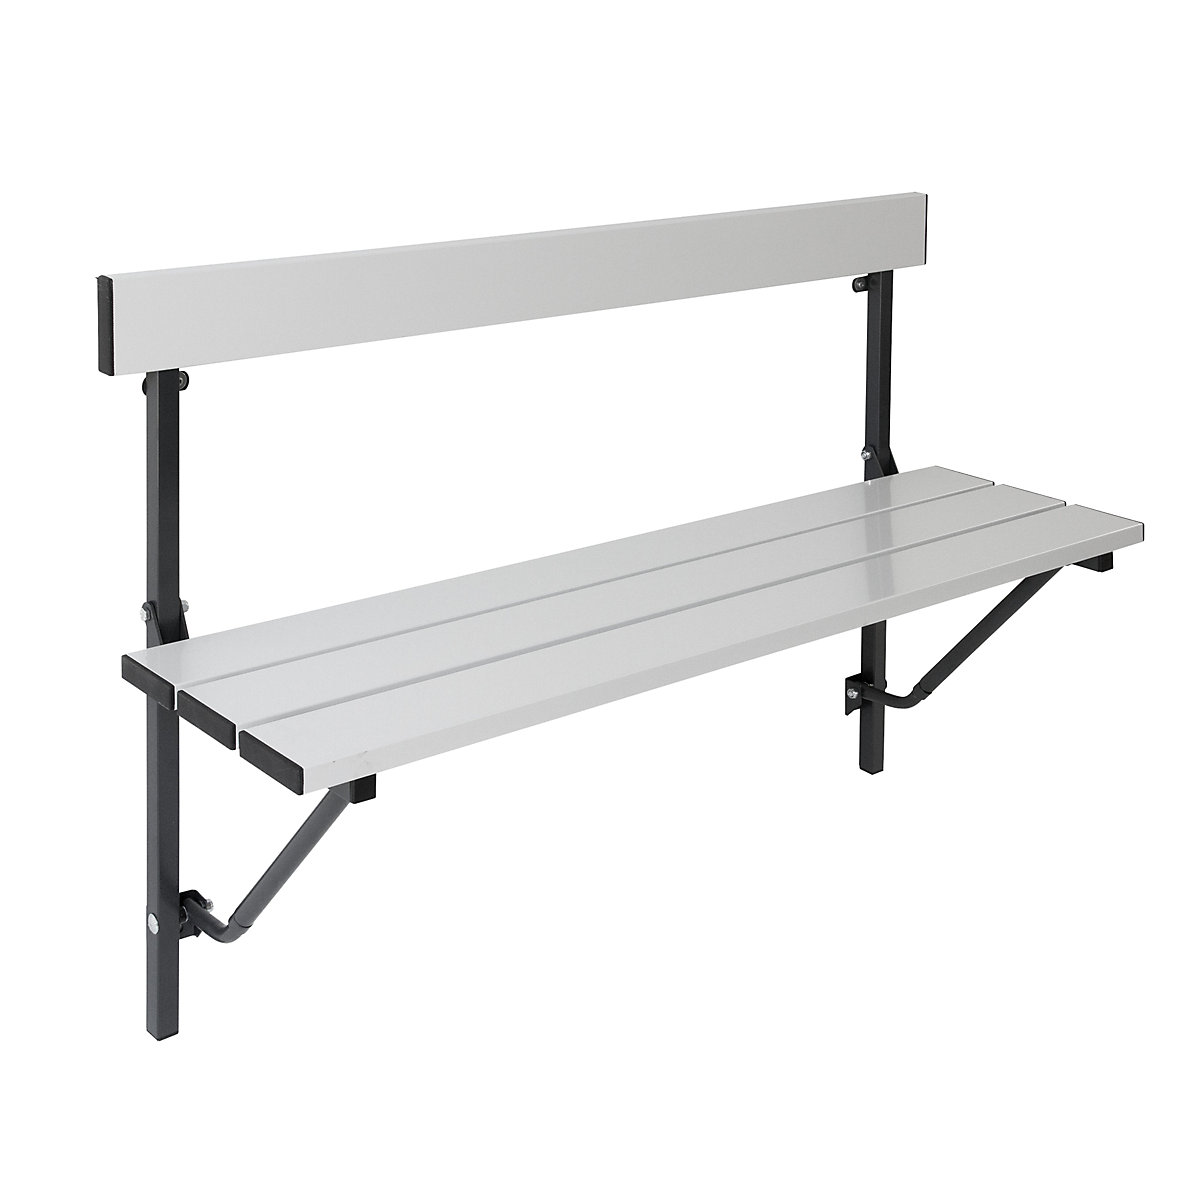 Sypro – Folding wall-mounted bench, folding, length up to 1200 mm, with aluminium slats